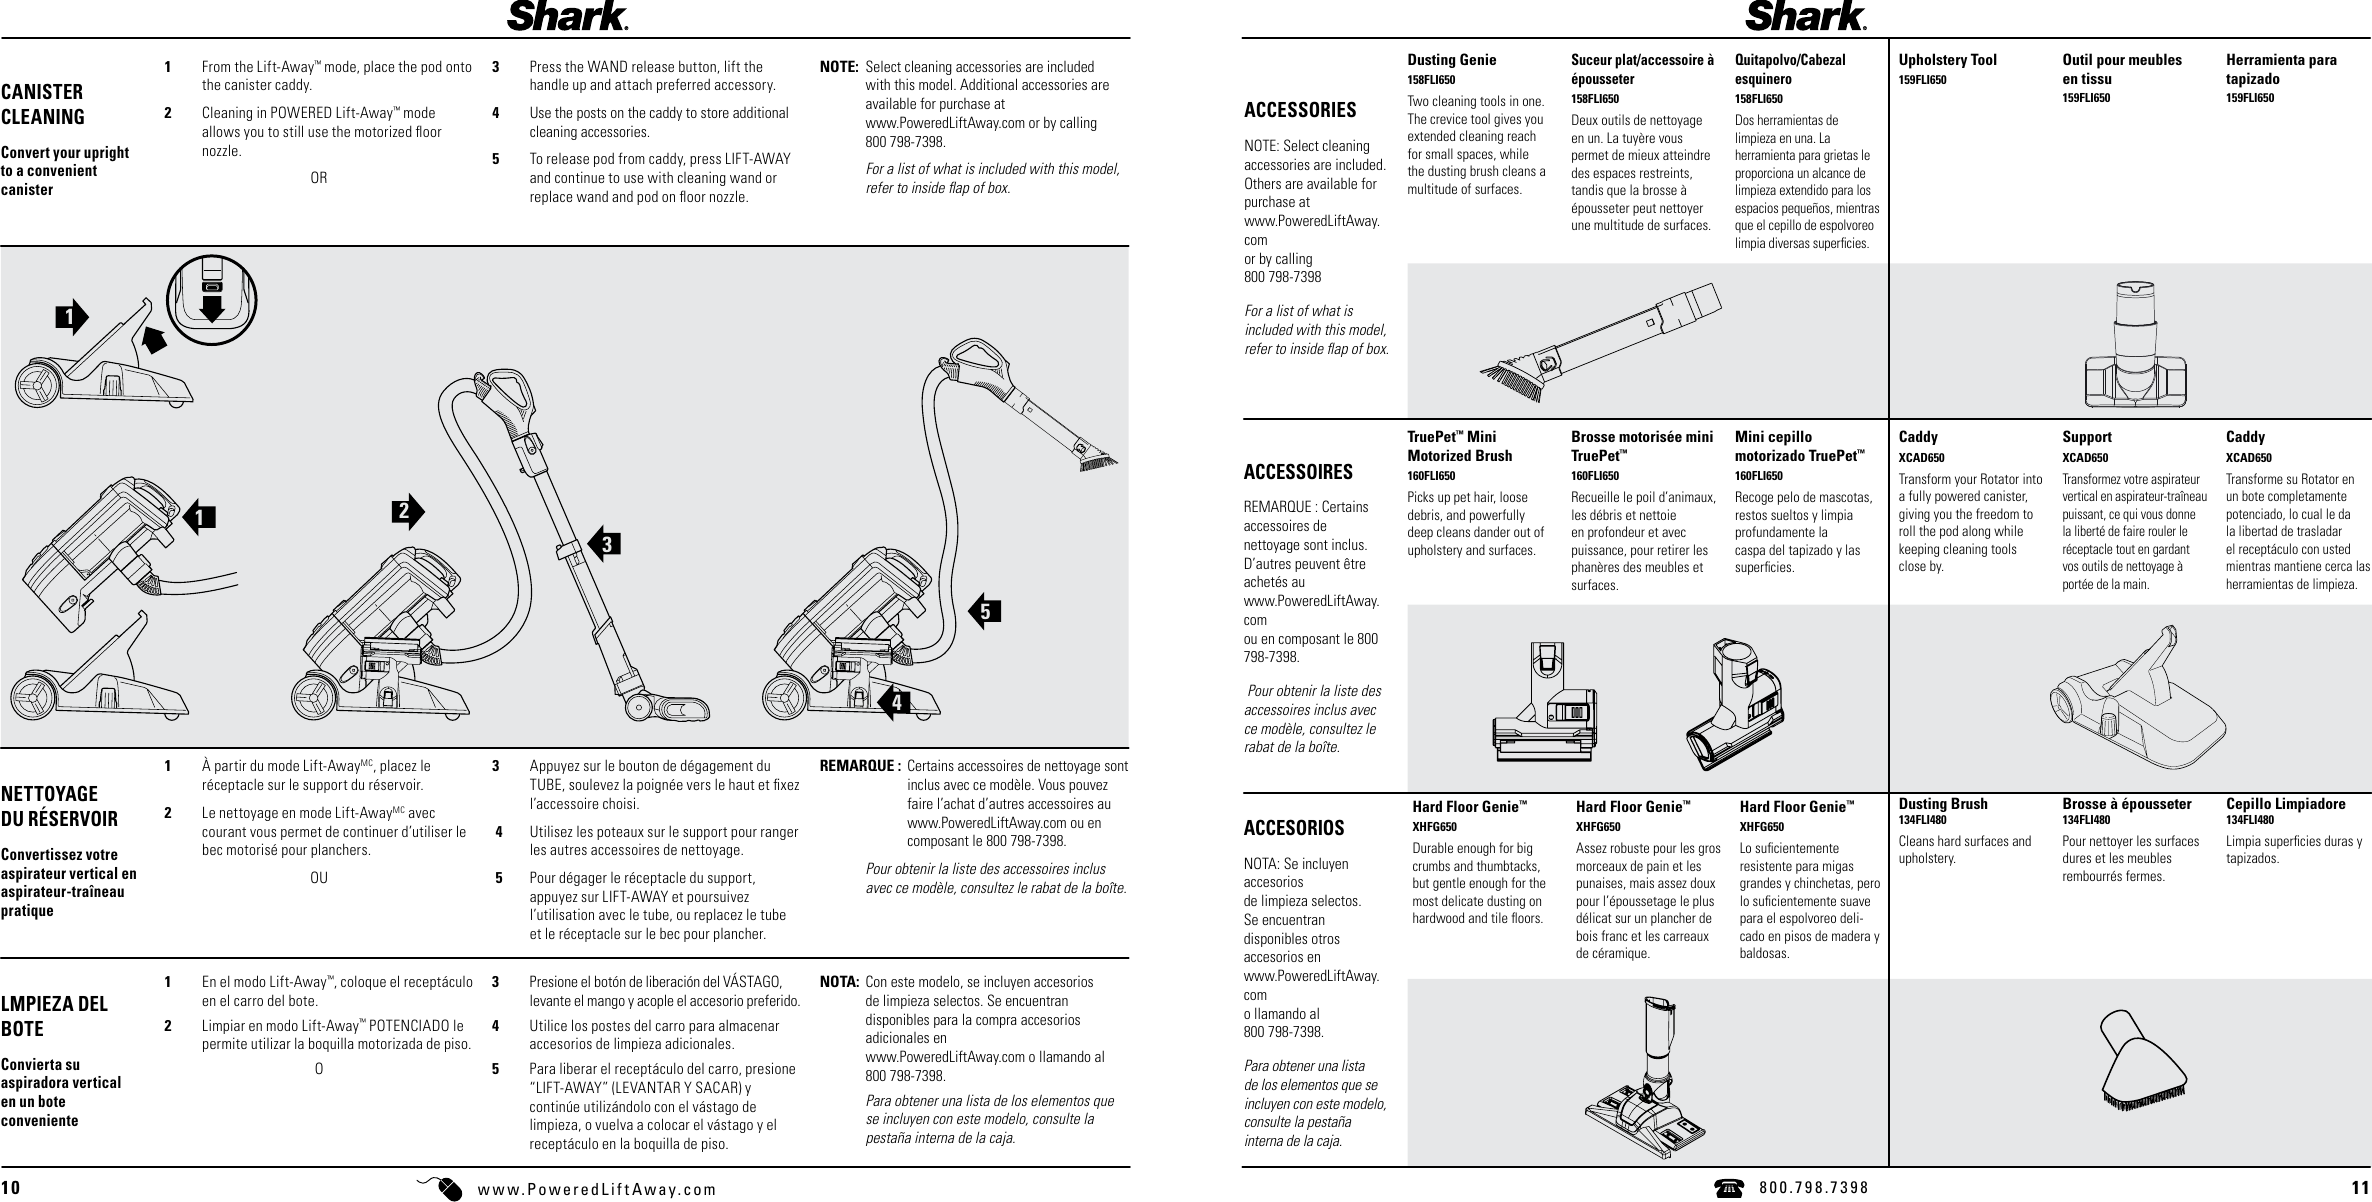 Page 6 of 11 - Shark Shark-Shark-Rotator-Powered-Lift-Away-Upright-Vacuum-Nv652-Owners-Guide-  Shark-shark-rotator-powered-lift-away-upright-vacuum-nv652-owners-guide